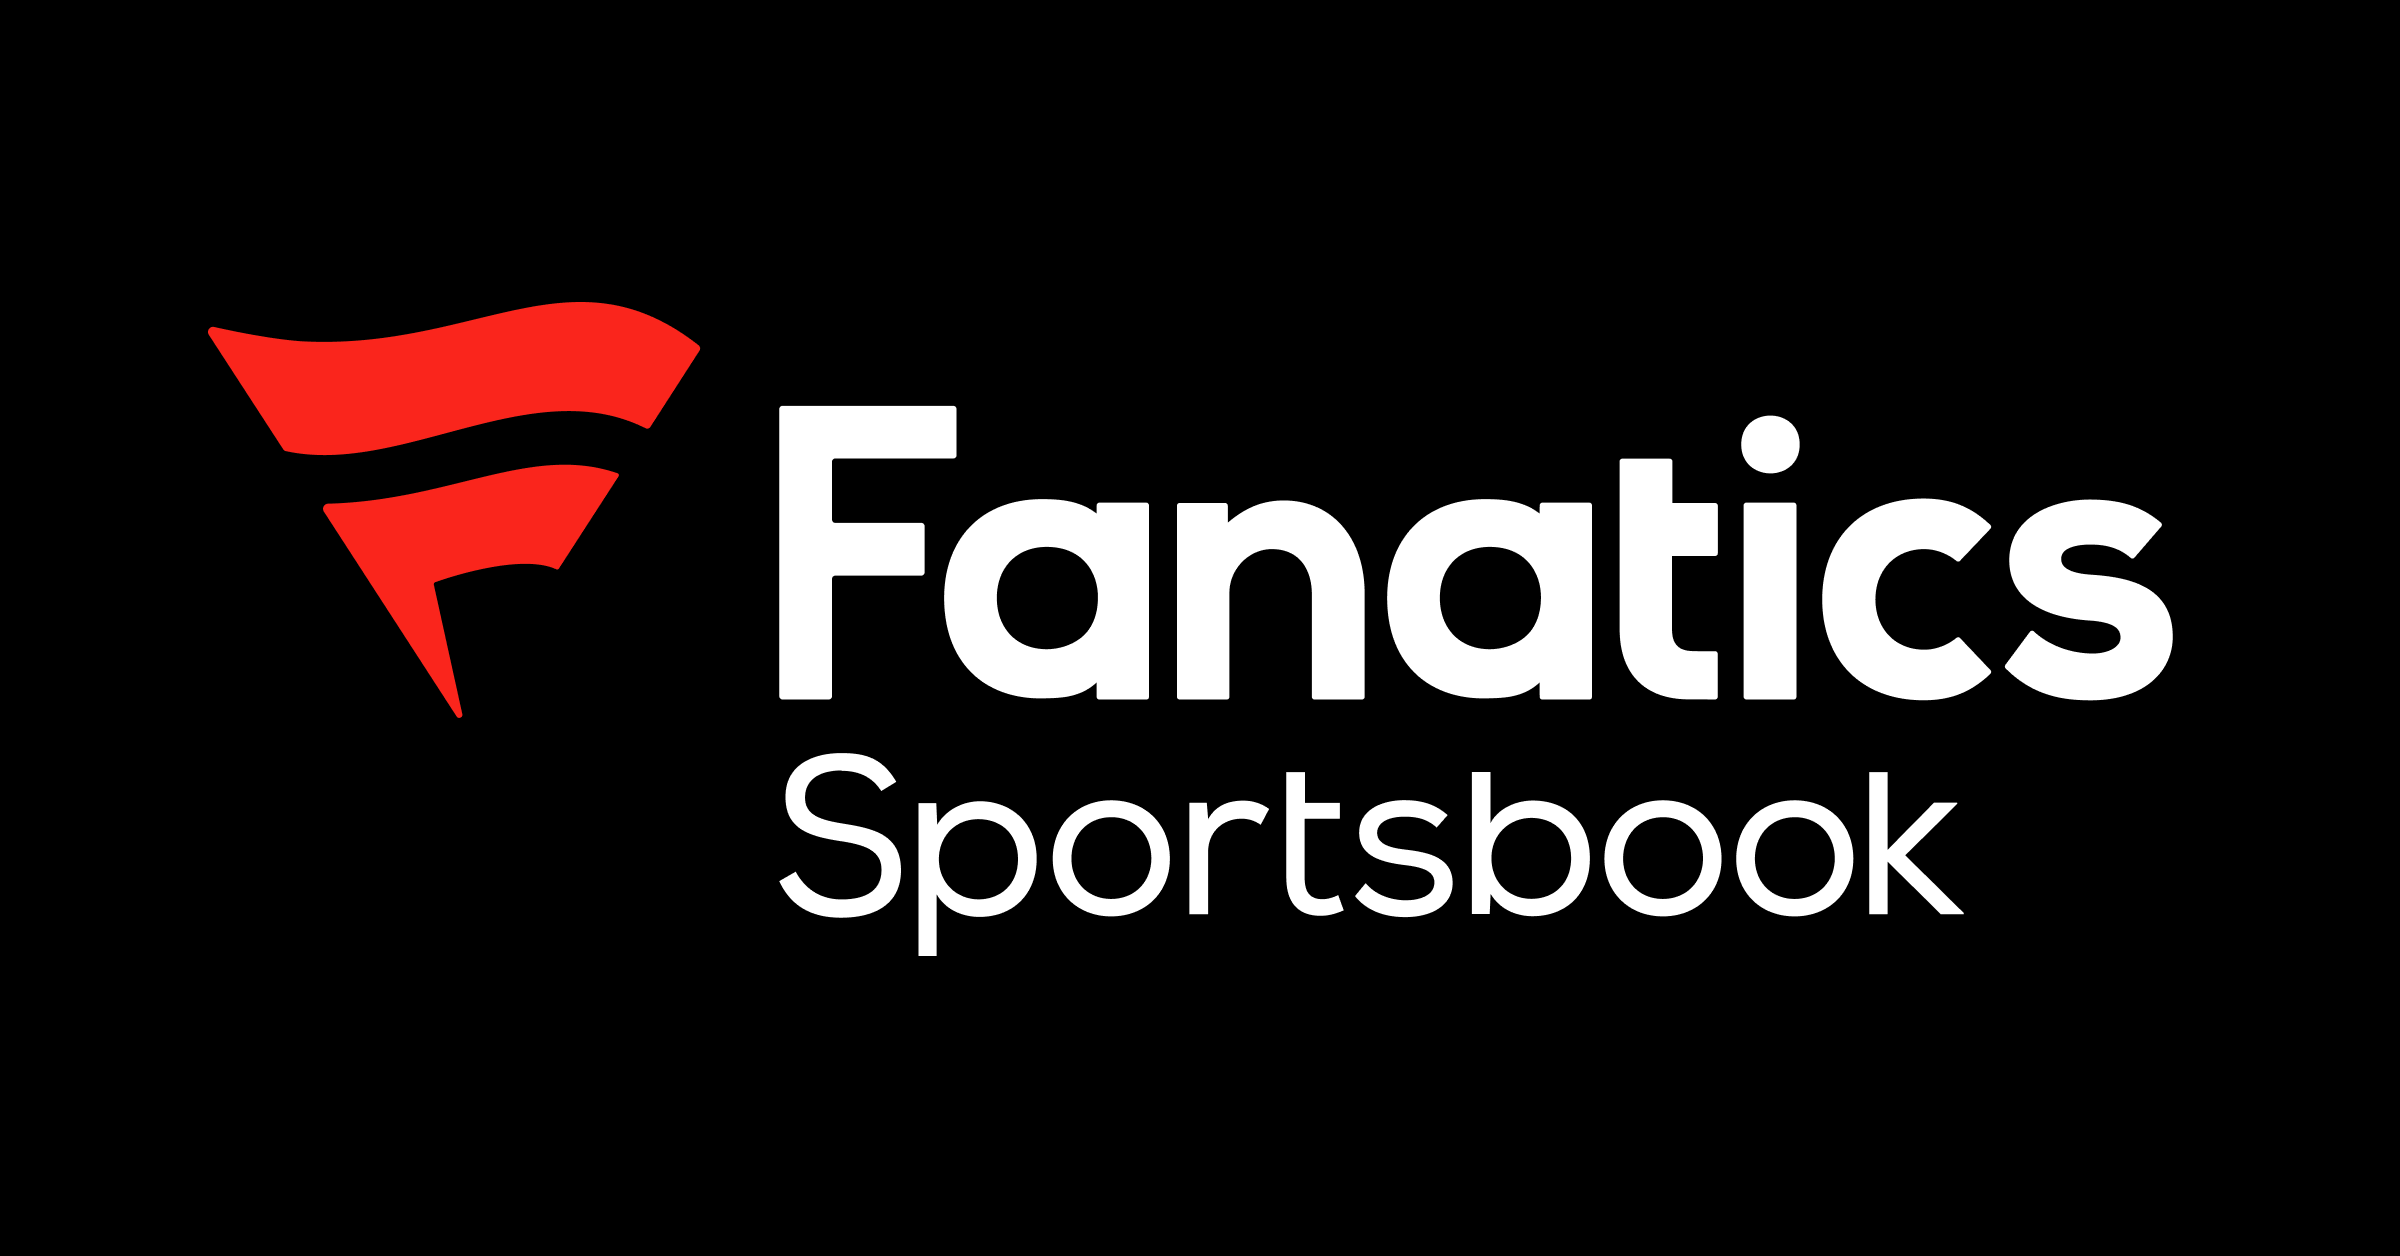 Fanatics sportsbook review